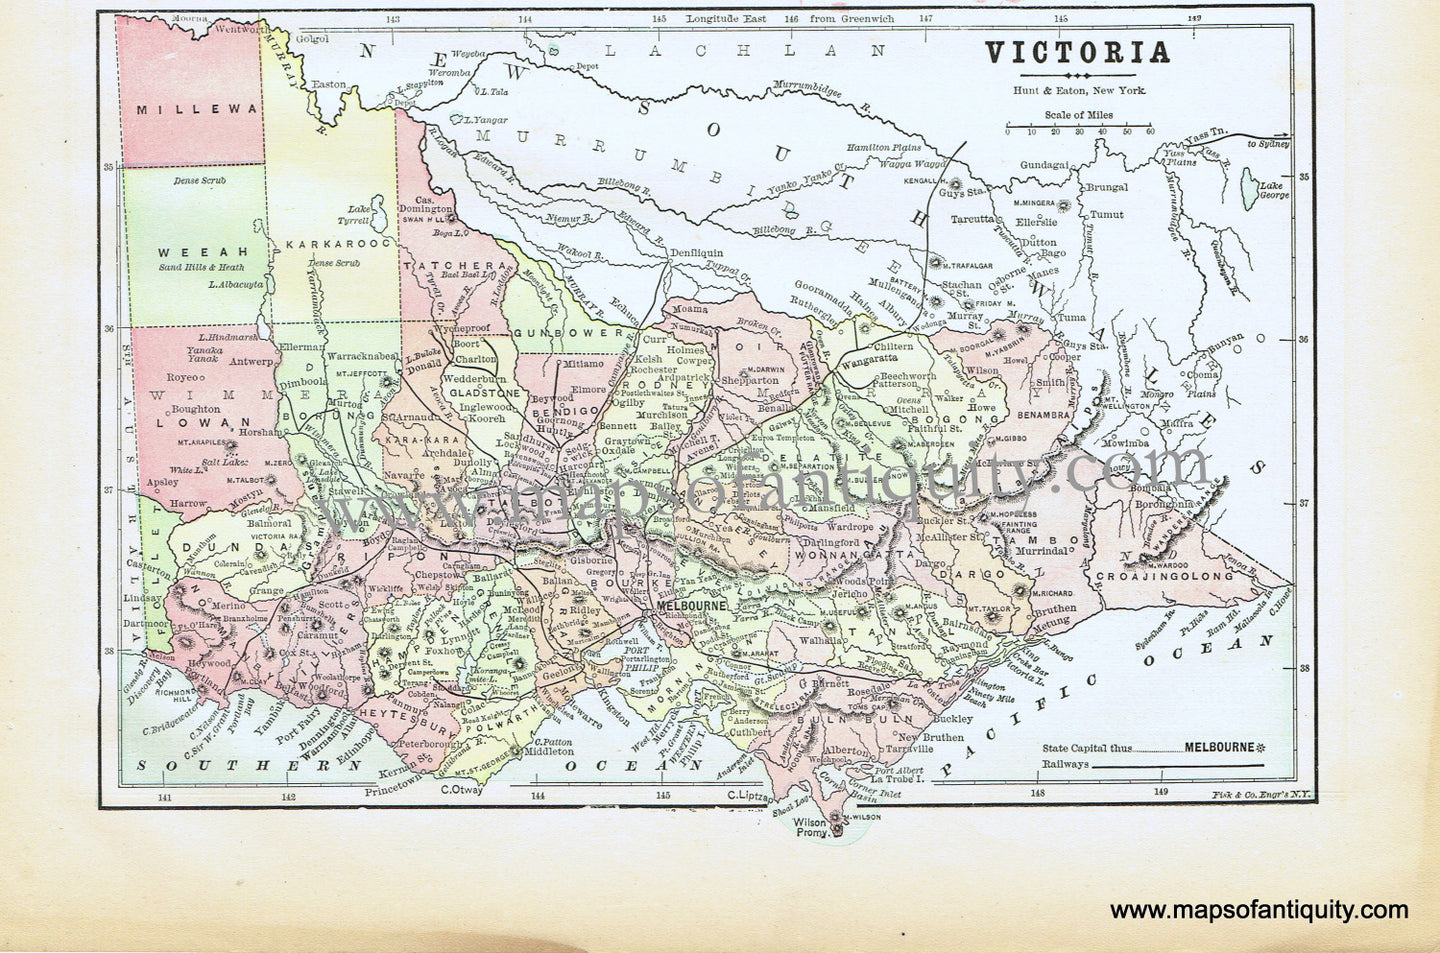 Antique-Printed-Color-Map-Victoria-Oceania-Australia-1893-Hunt-&-Eaton-Maps-Of-Antiquity